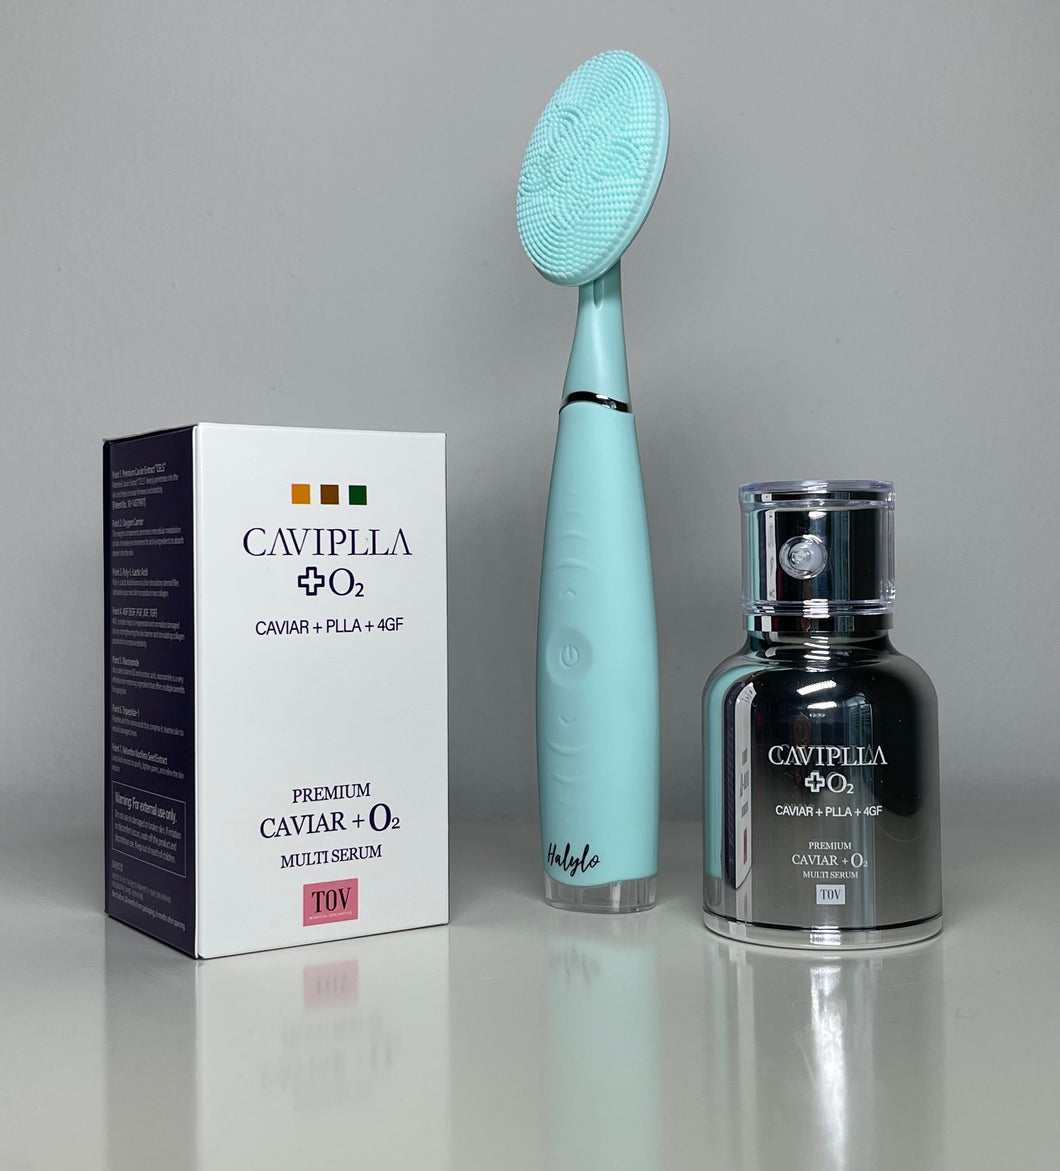 Caviplla O2 Premier Caviar Multi Serum 30ml with Face Sonic Brush - European Beauty by B